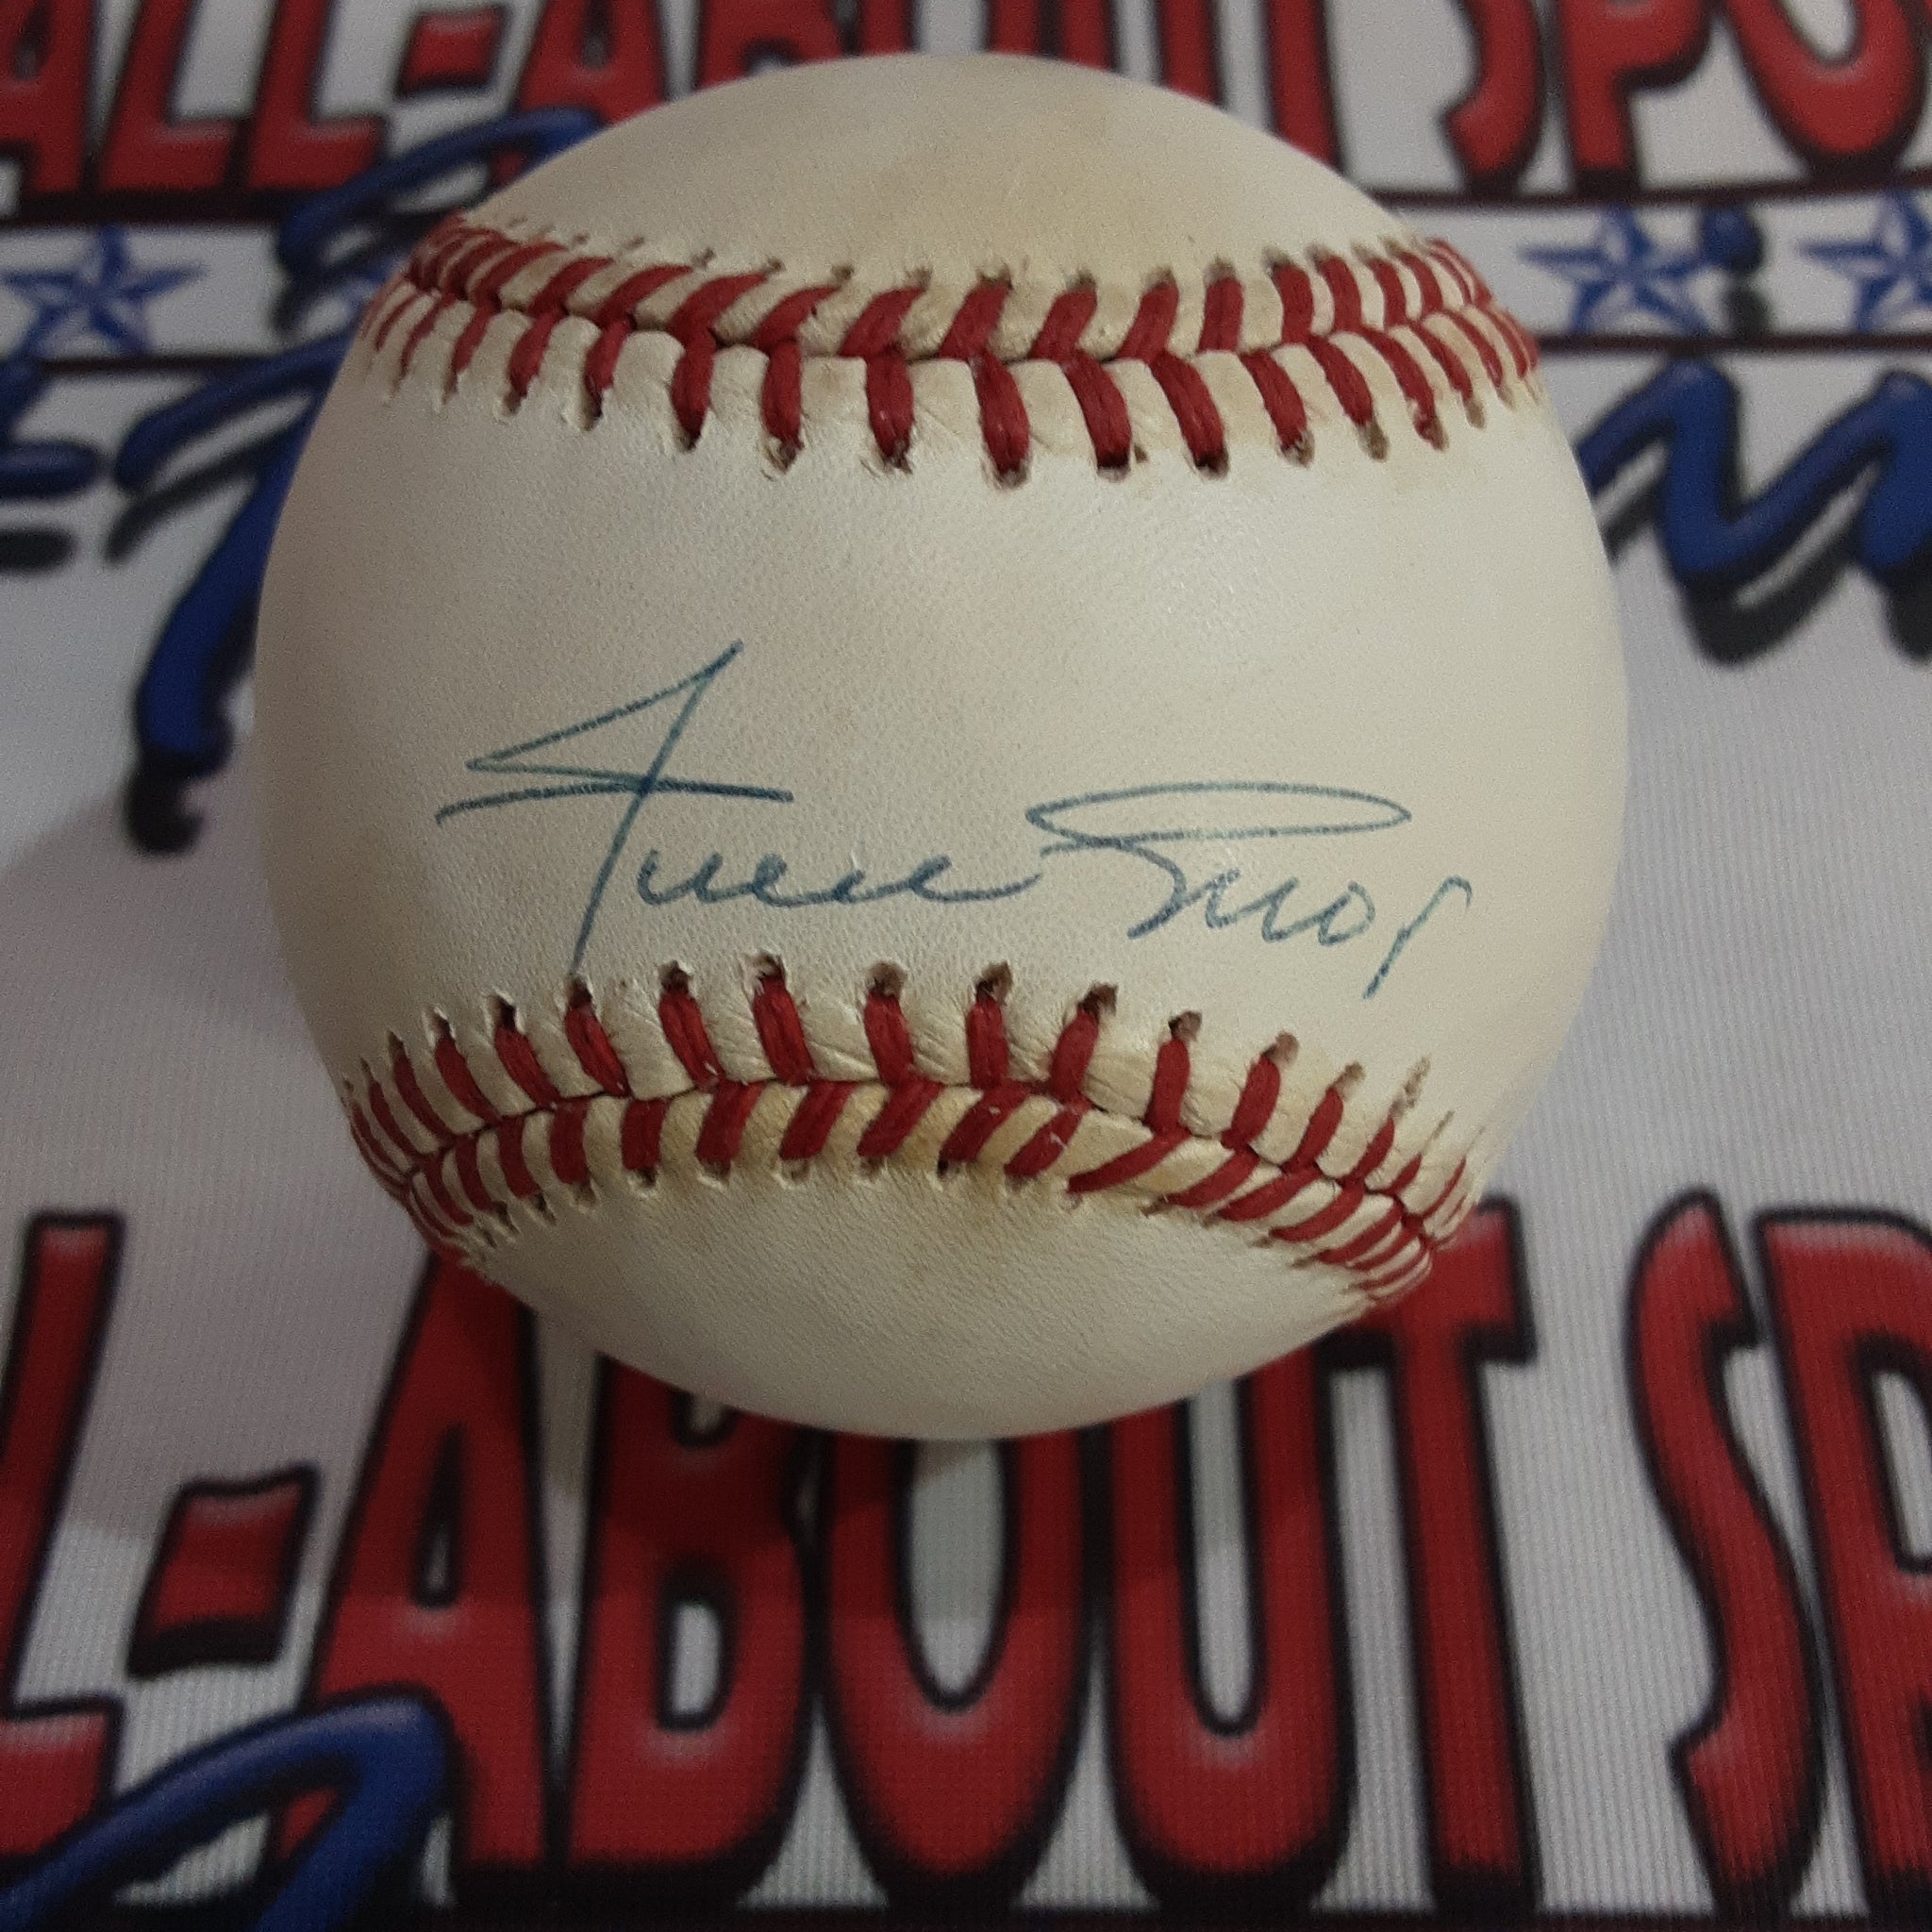 Willie Mays Authentic Signed Baseball Autographed JSA/LOA.